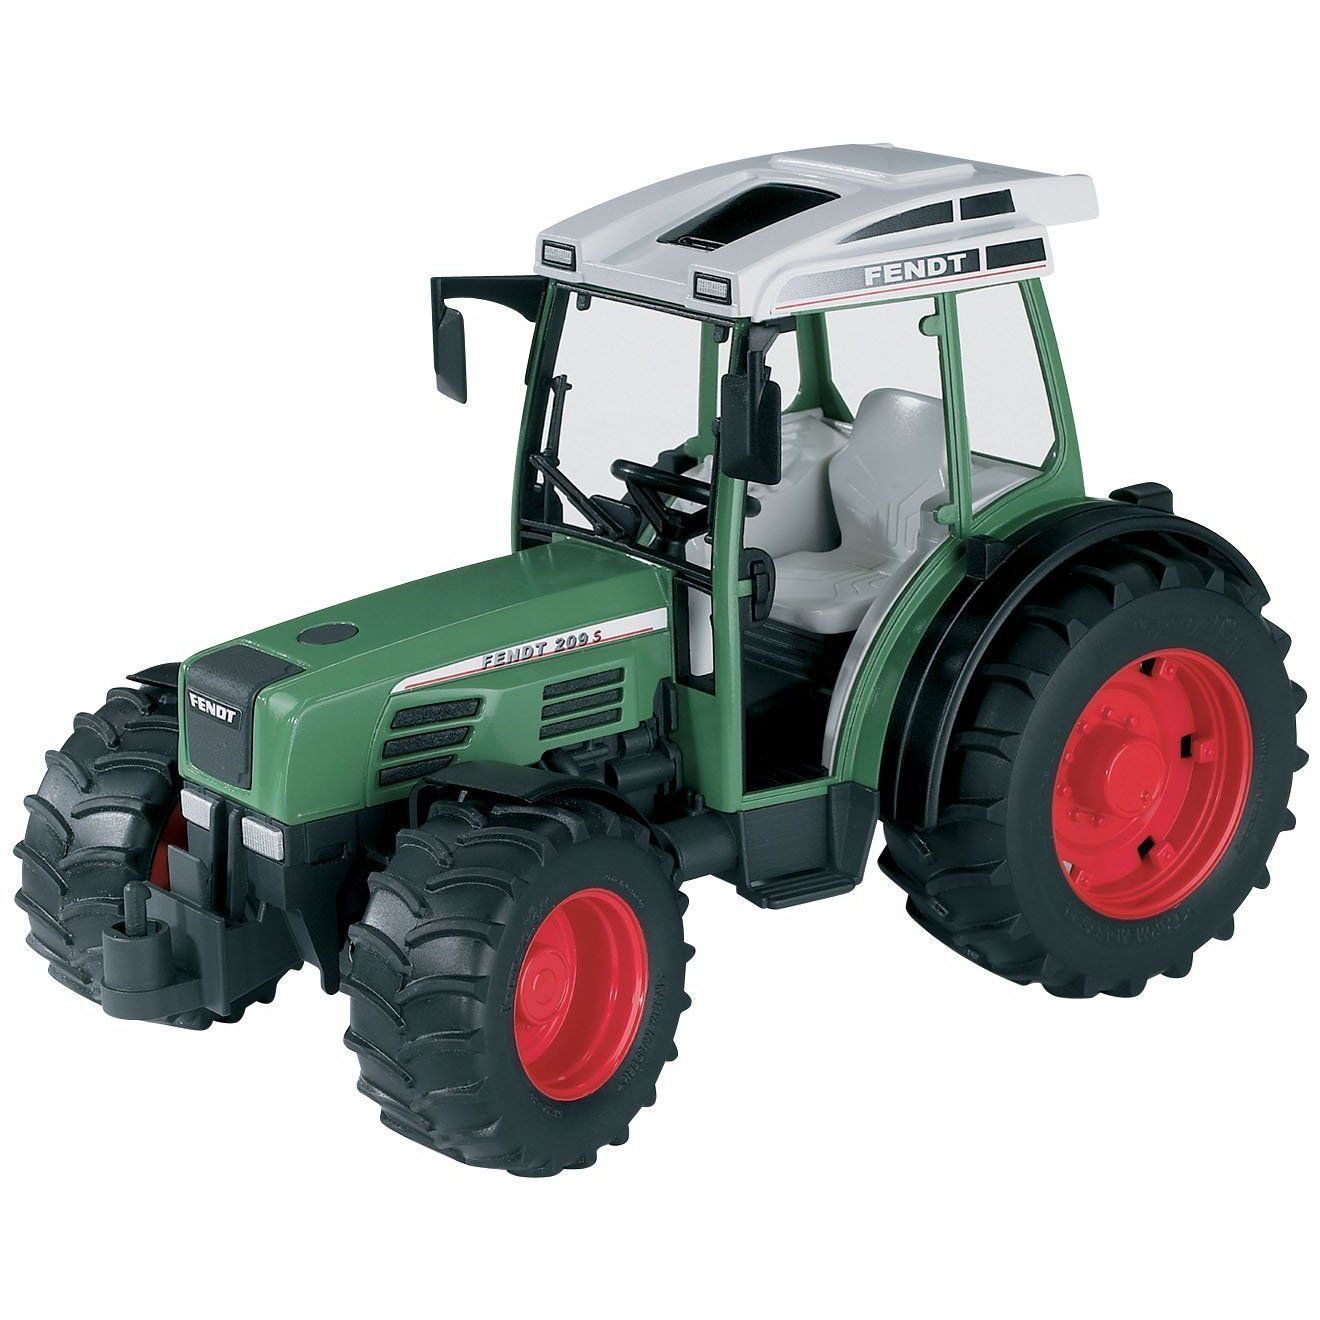 Fendt 209 S Tractor Green - Toys & Co. - Bruder Trucks